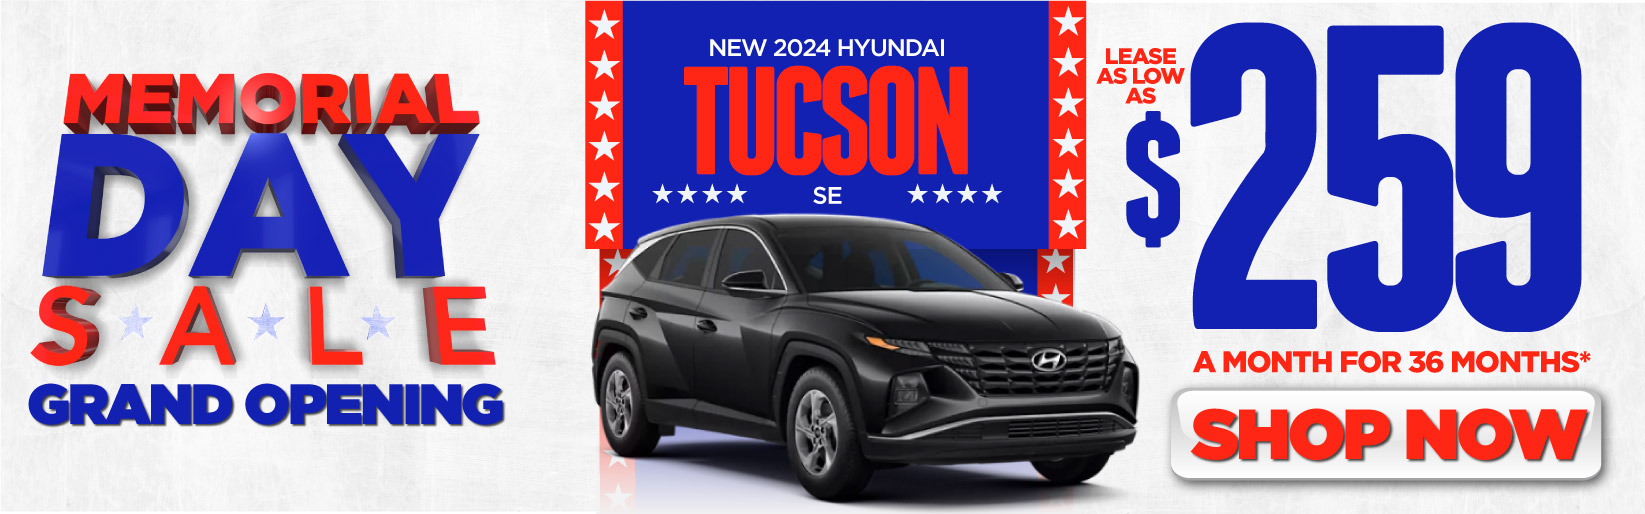 New 2024 Hyundai Kona - $239/mo for 36 months* plus $500 HMF Dealer Choice Cash** – Act Now